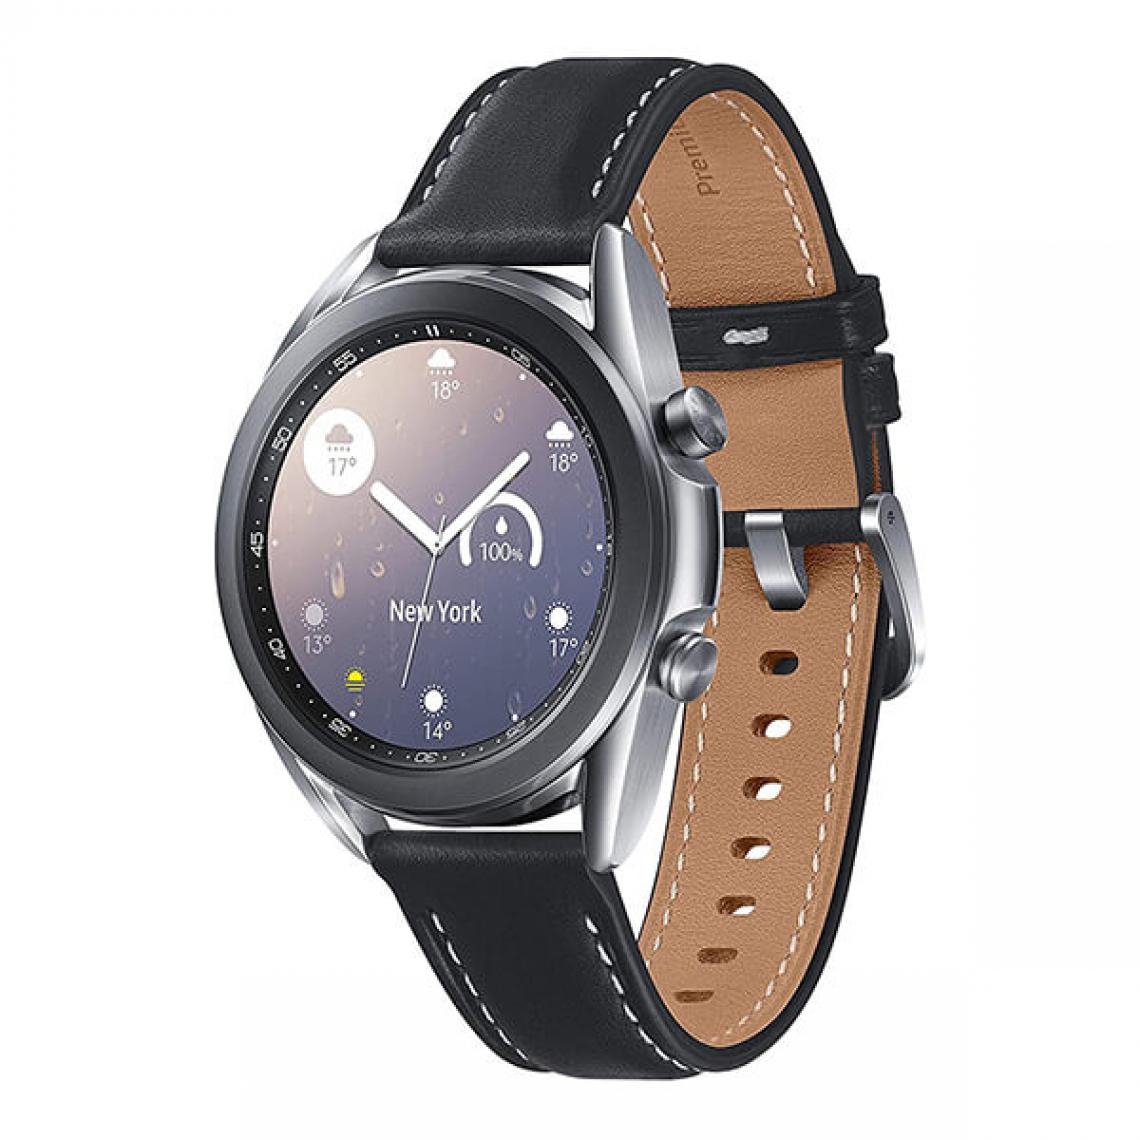 Samsung - Samsung Watch 3 41mm Argent (Mystic Silver) Wi-Fi R850 - Montre connectée